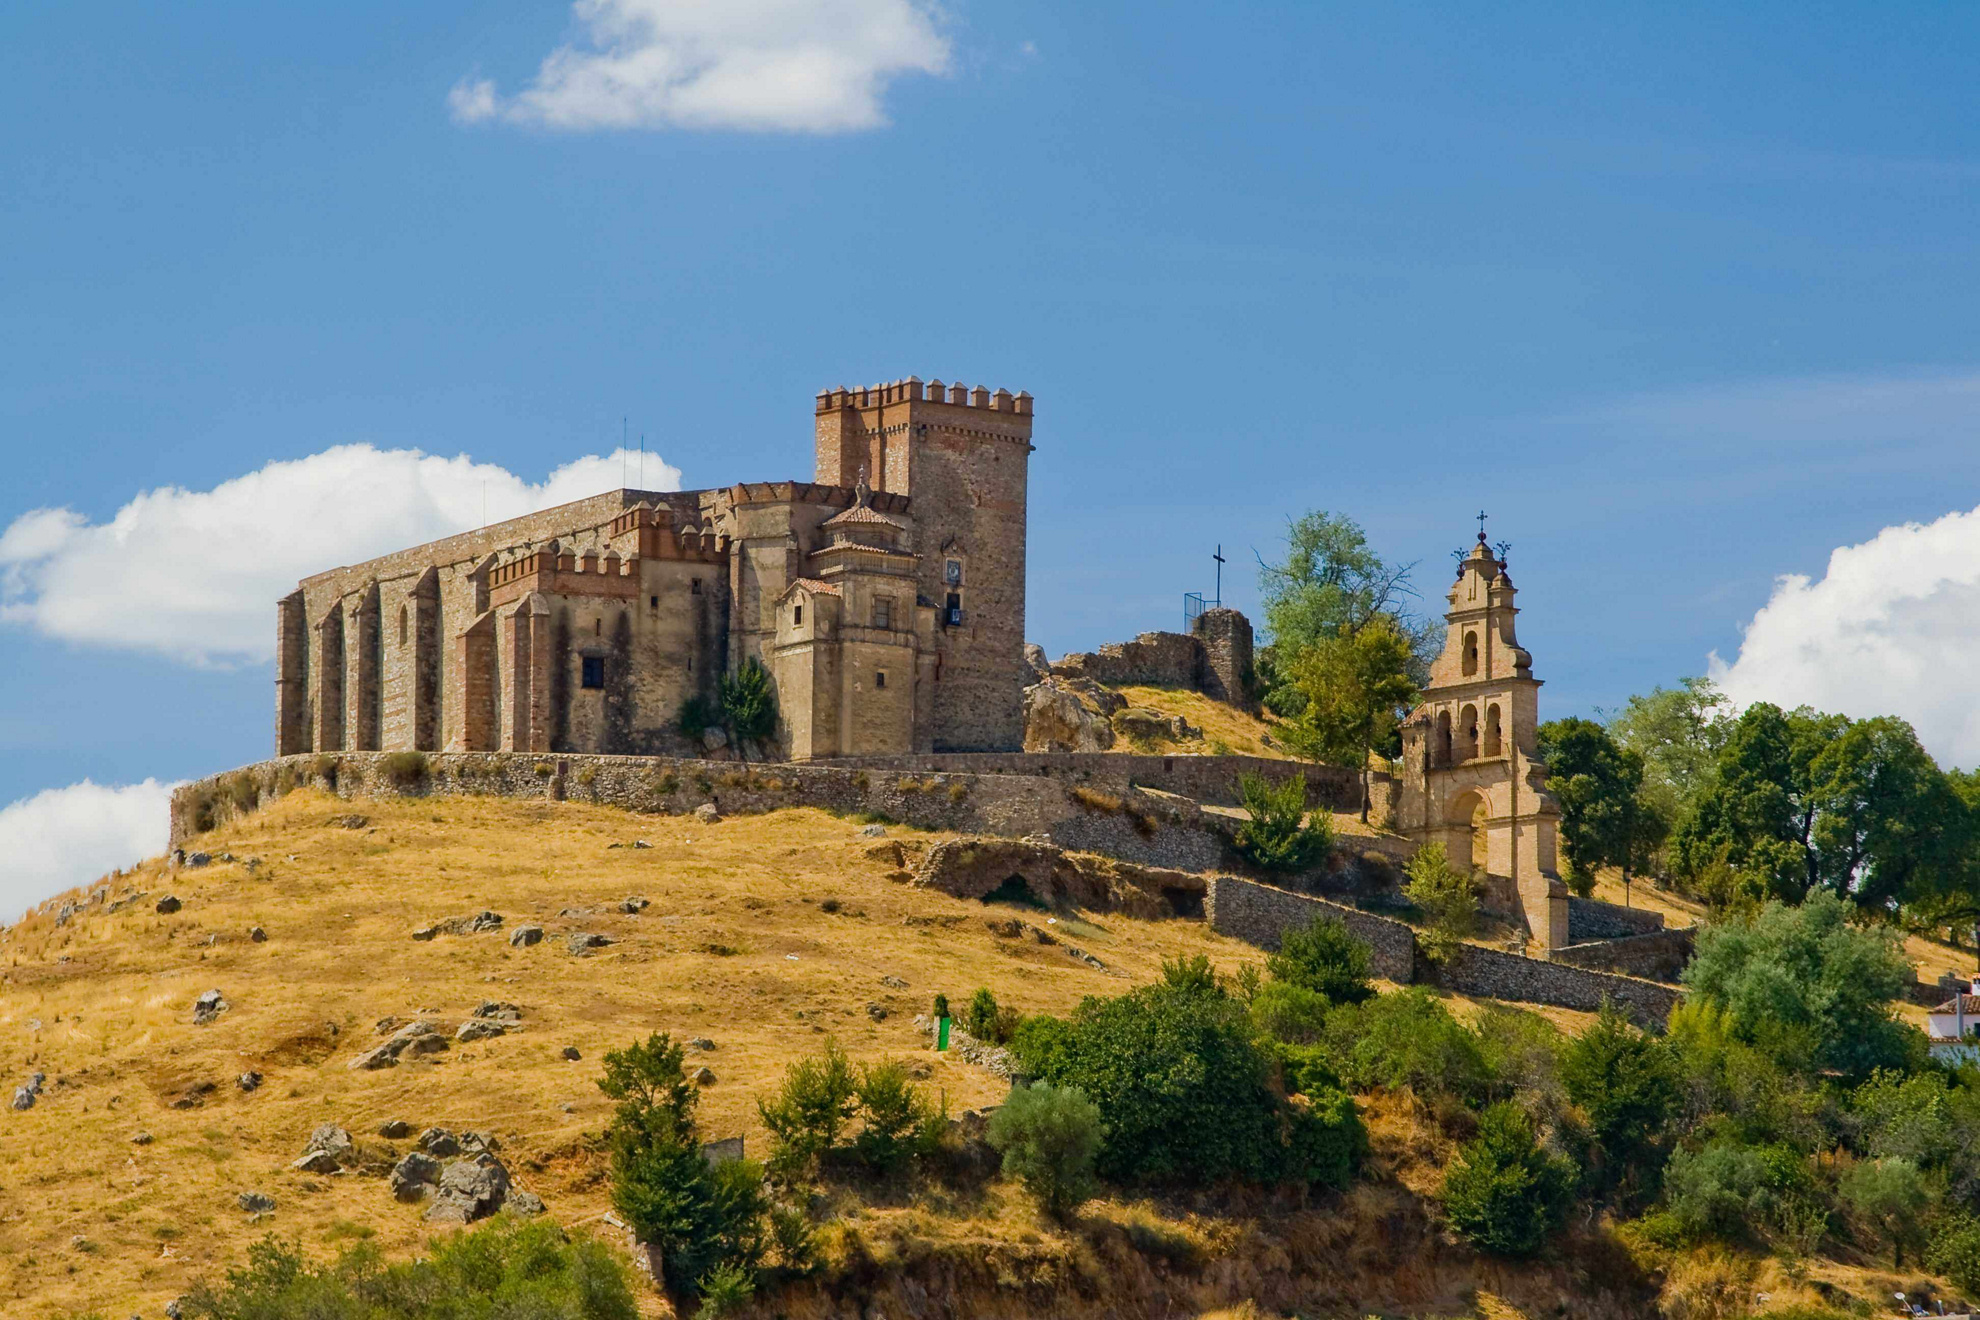 Aracena: A close-up shot of the Aracena castle during the day